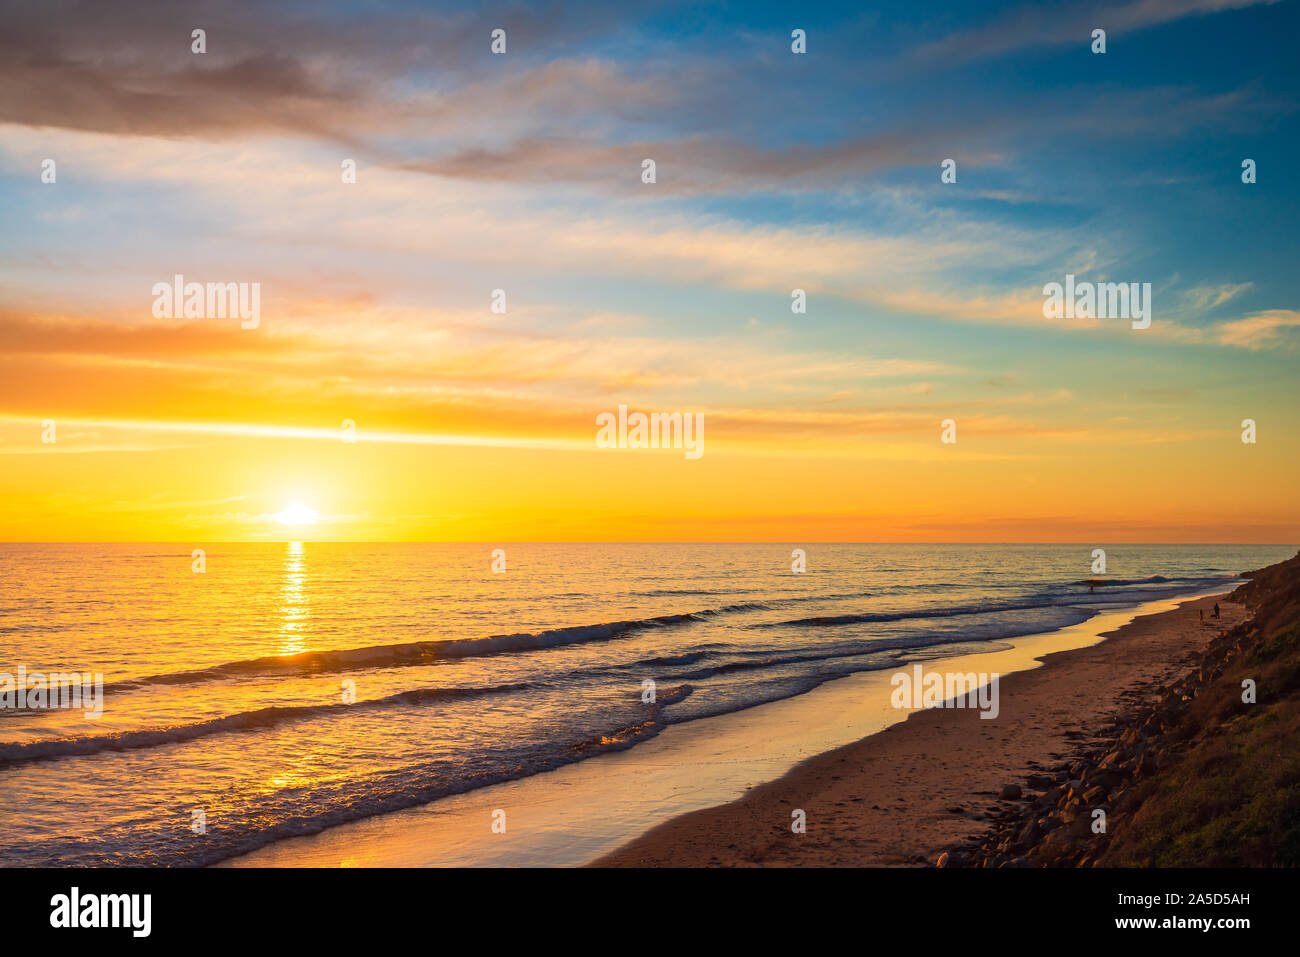 Christies Beach shoreline at sunset, South Australia Stock Photo